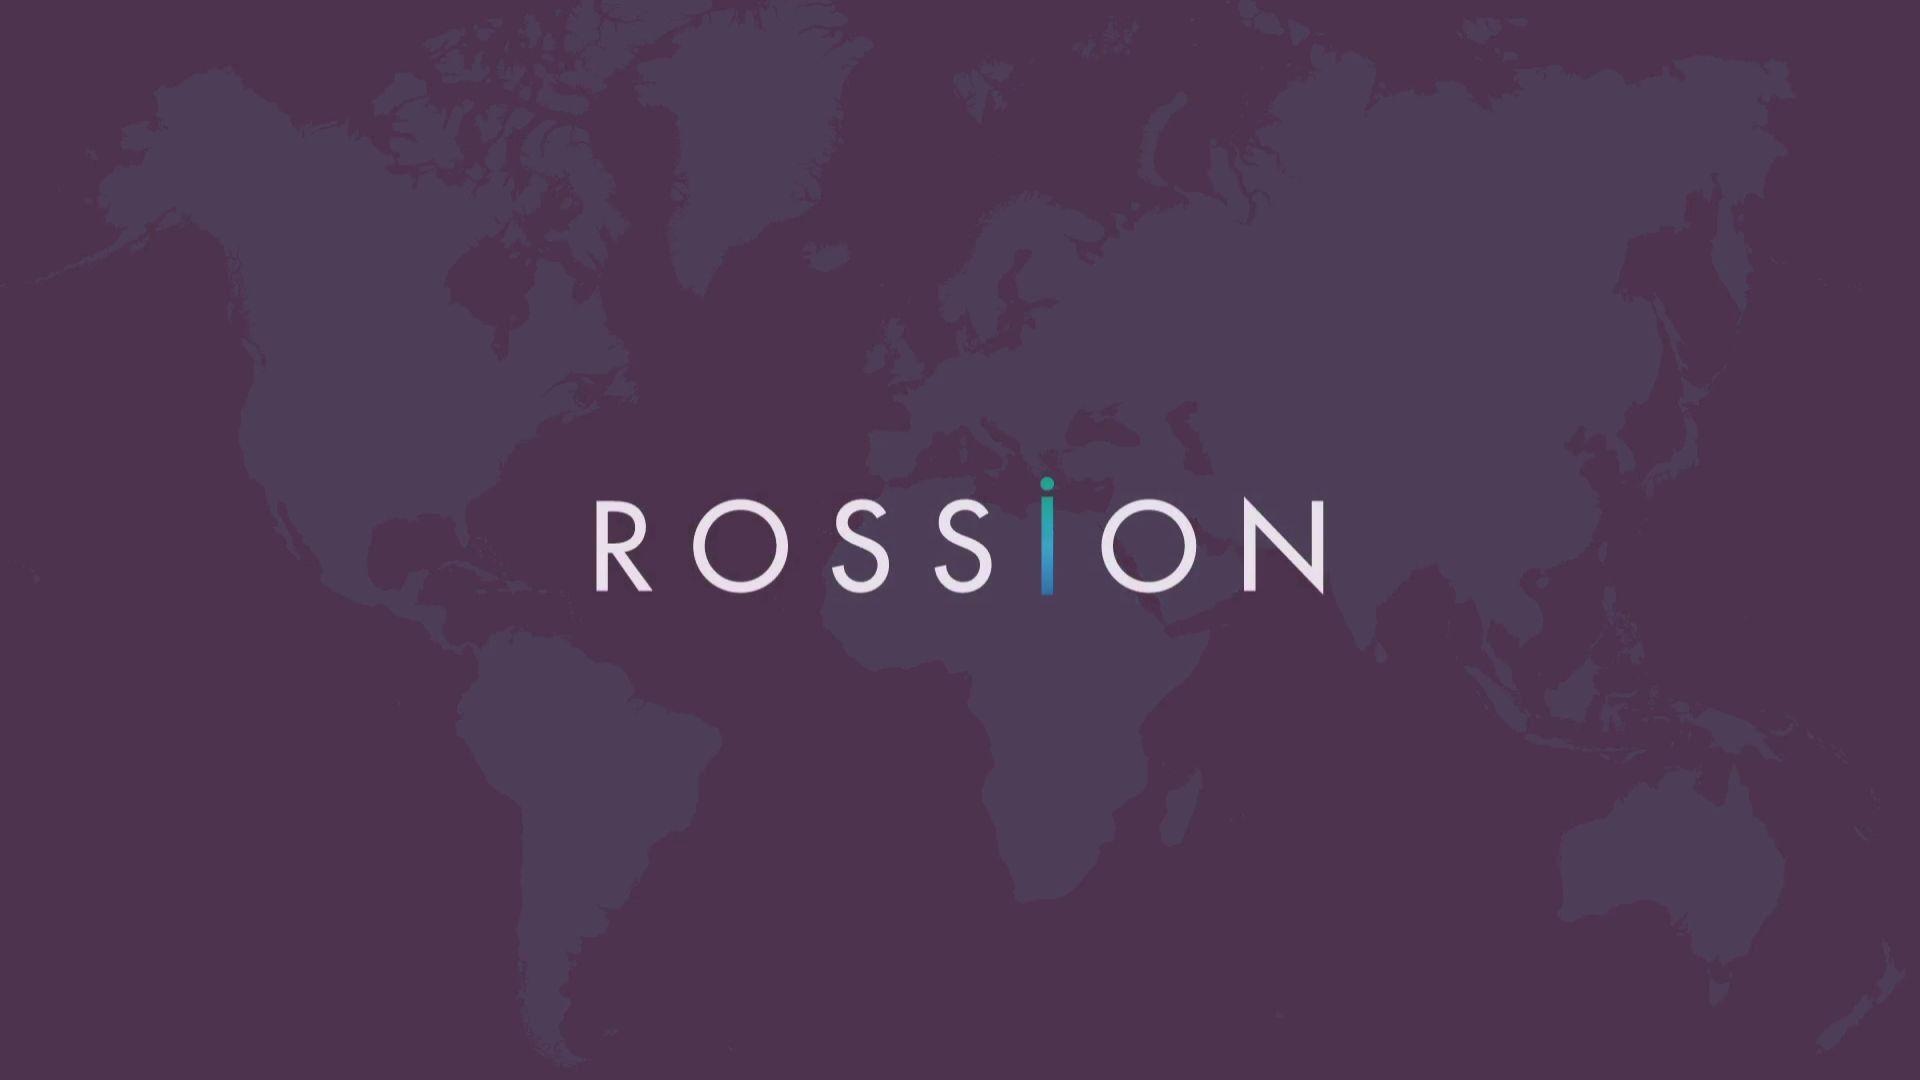 Rossion Logo - Rossion | Professional Translation Company - Certified Translation